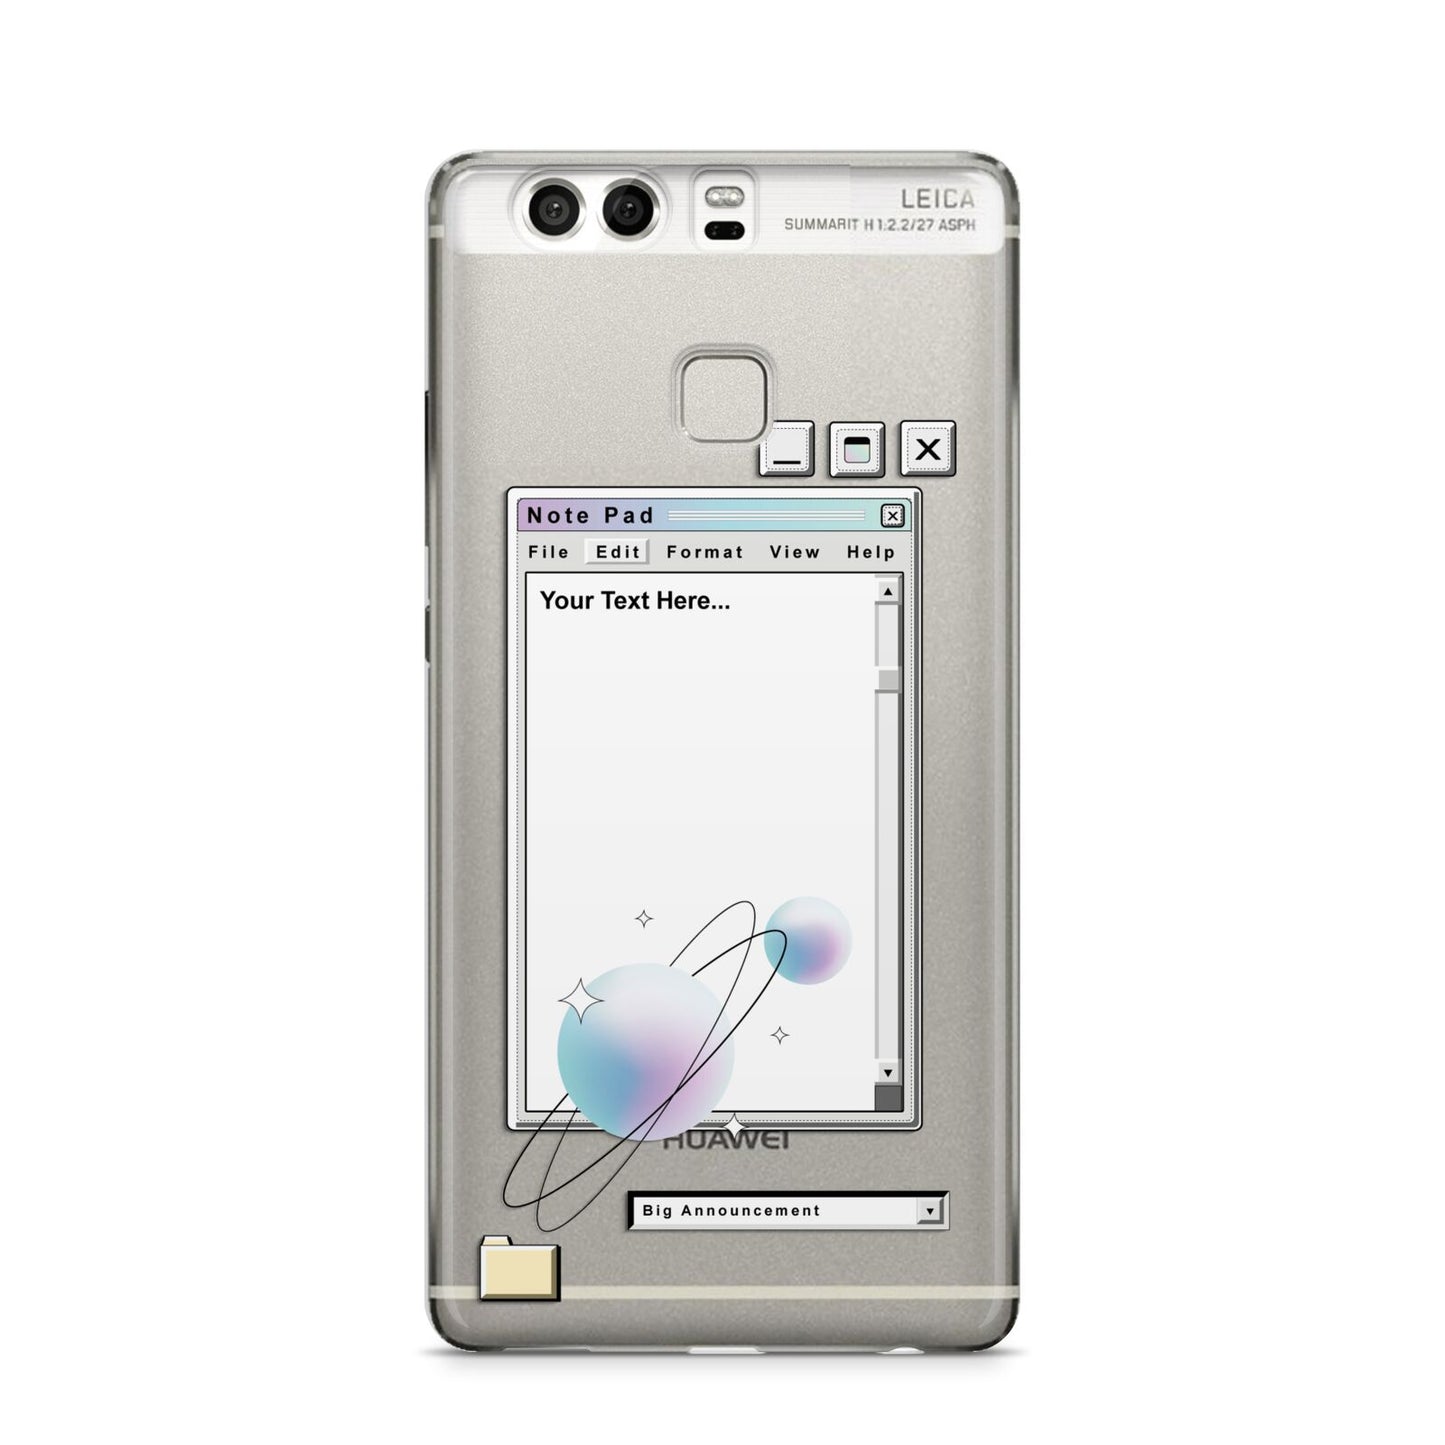 Retro Note Pad Huawei P9 Case